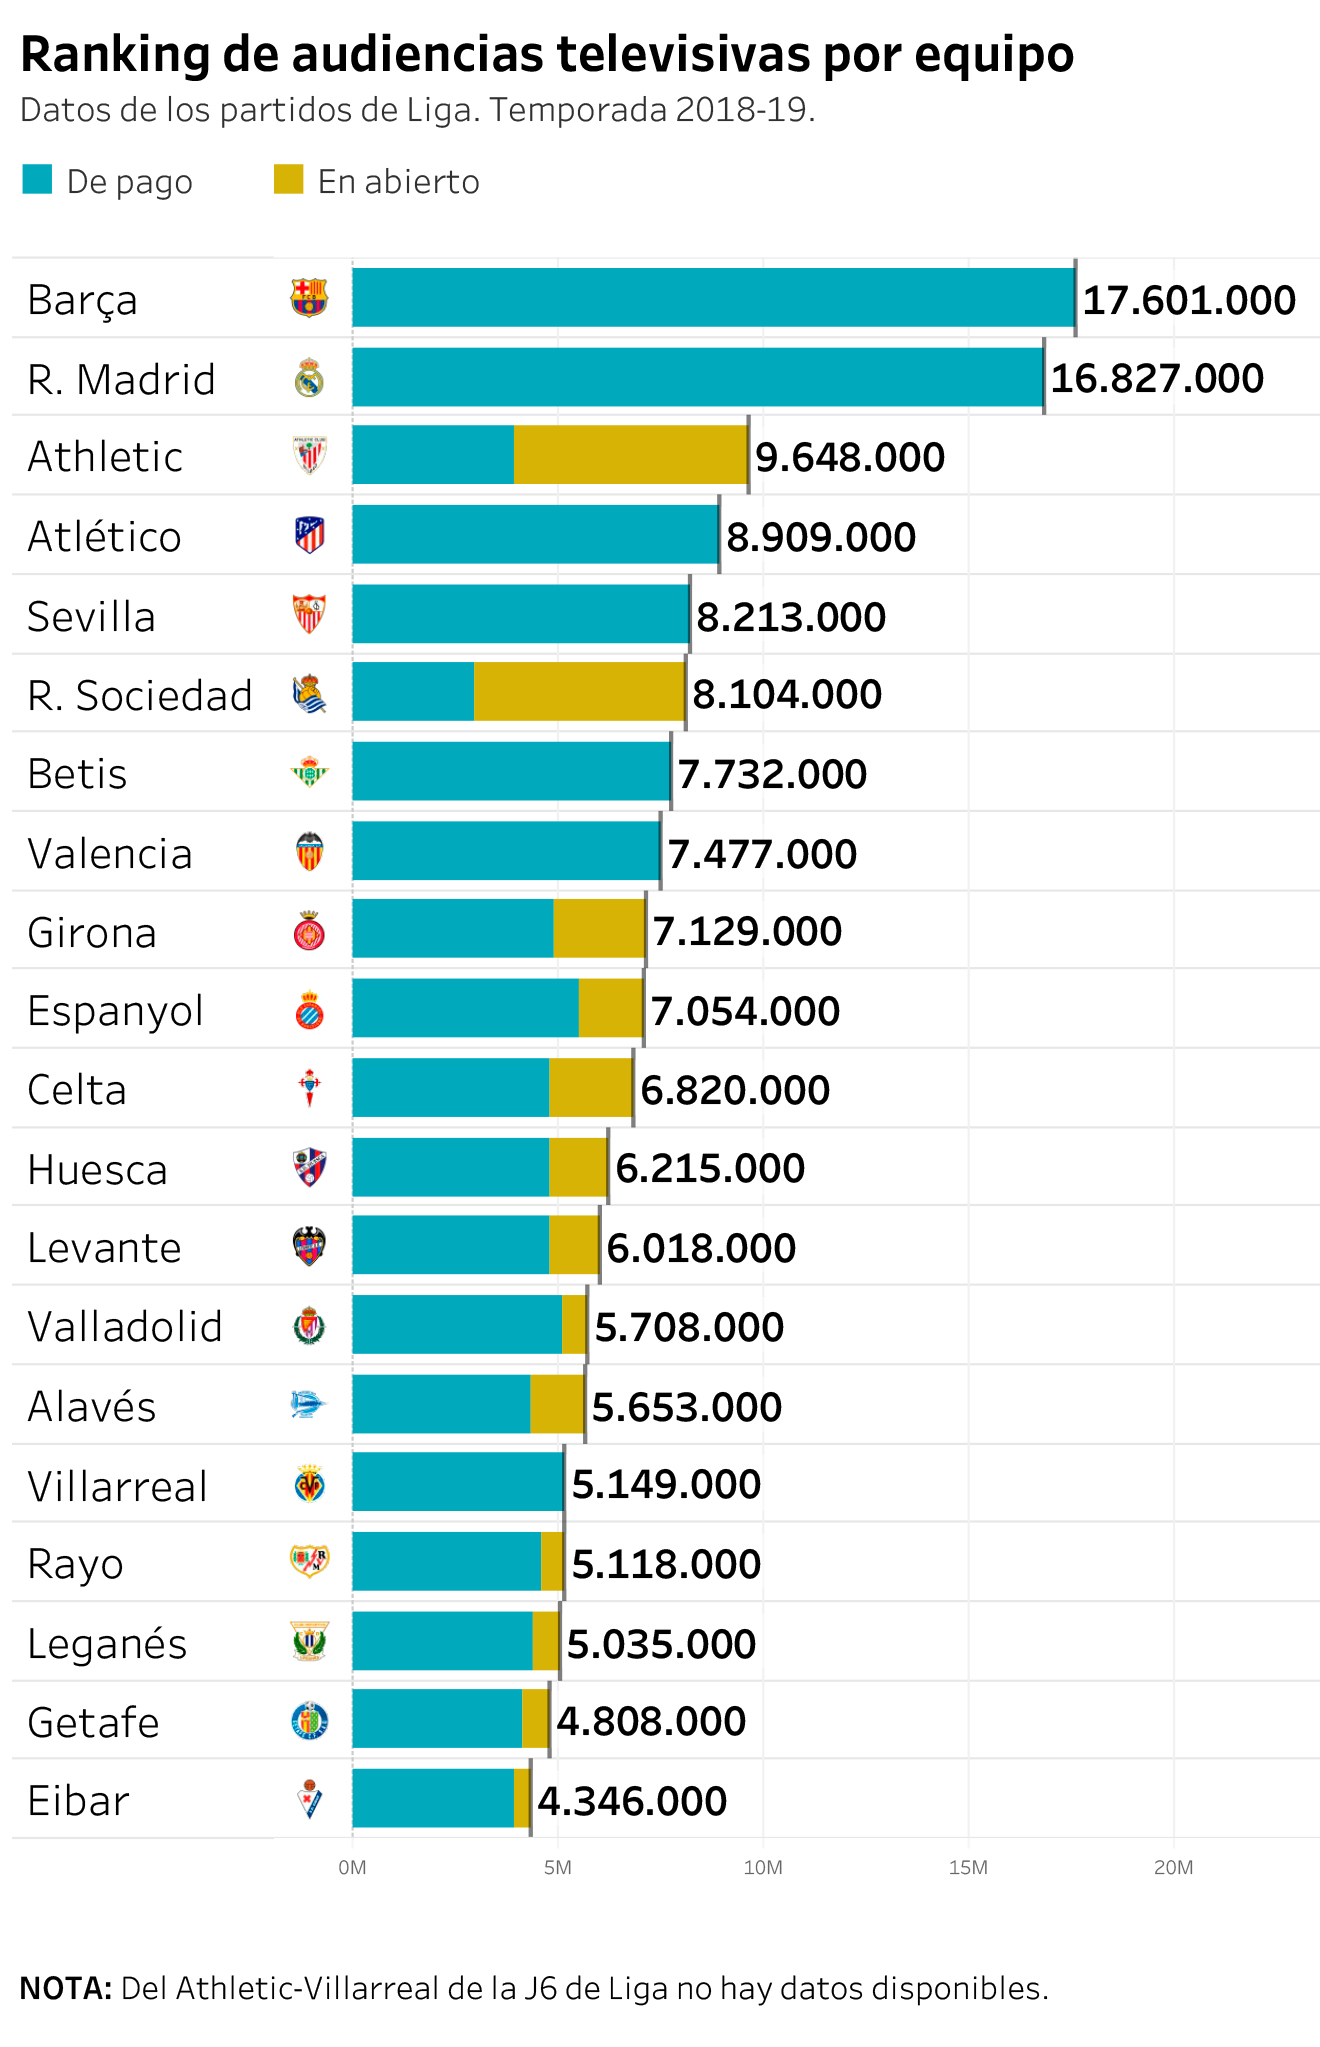 Spain Laliga Santander Has An Average